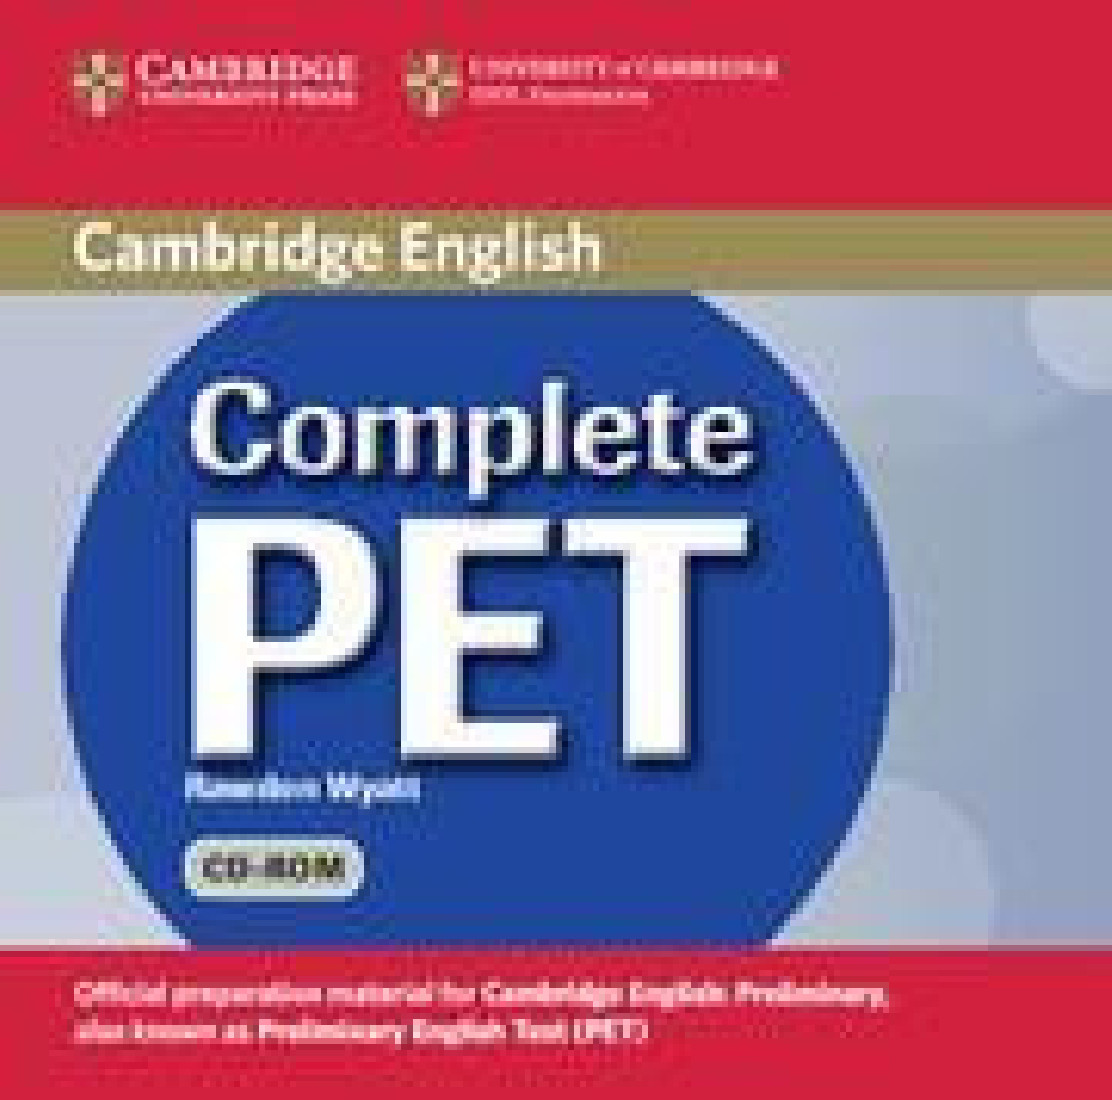 English test book. Pet учебник. Complete учебник. Pet for Schools учебники. Английский тест Pet.